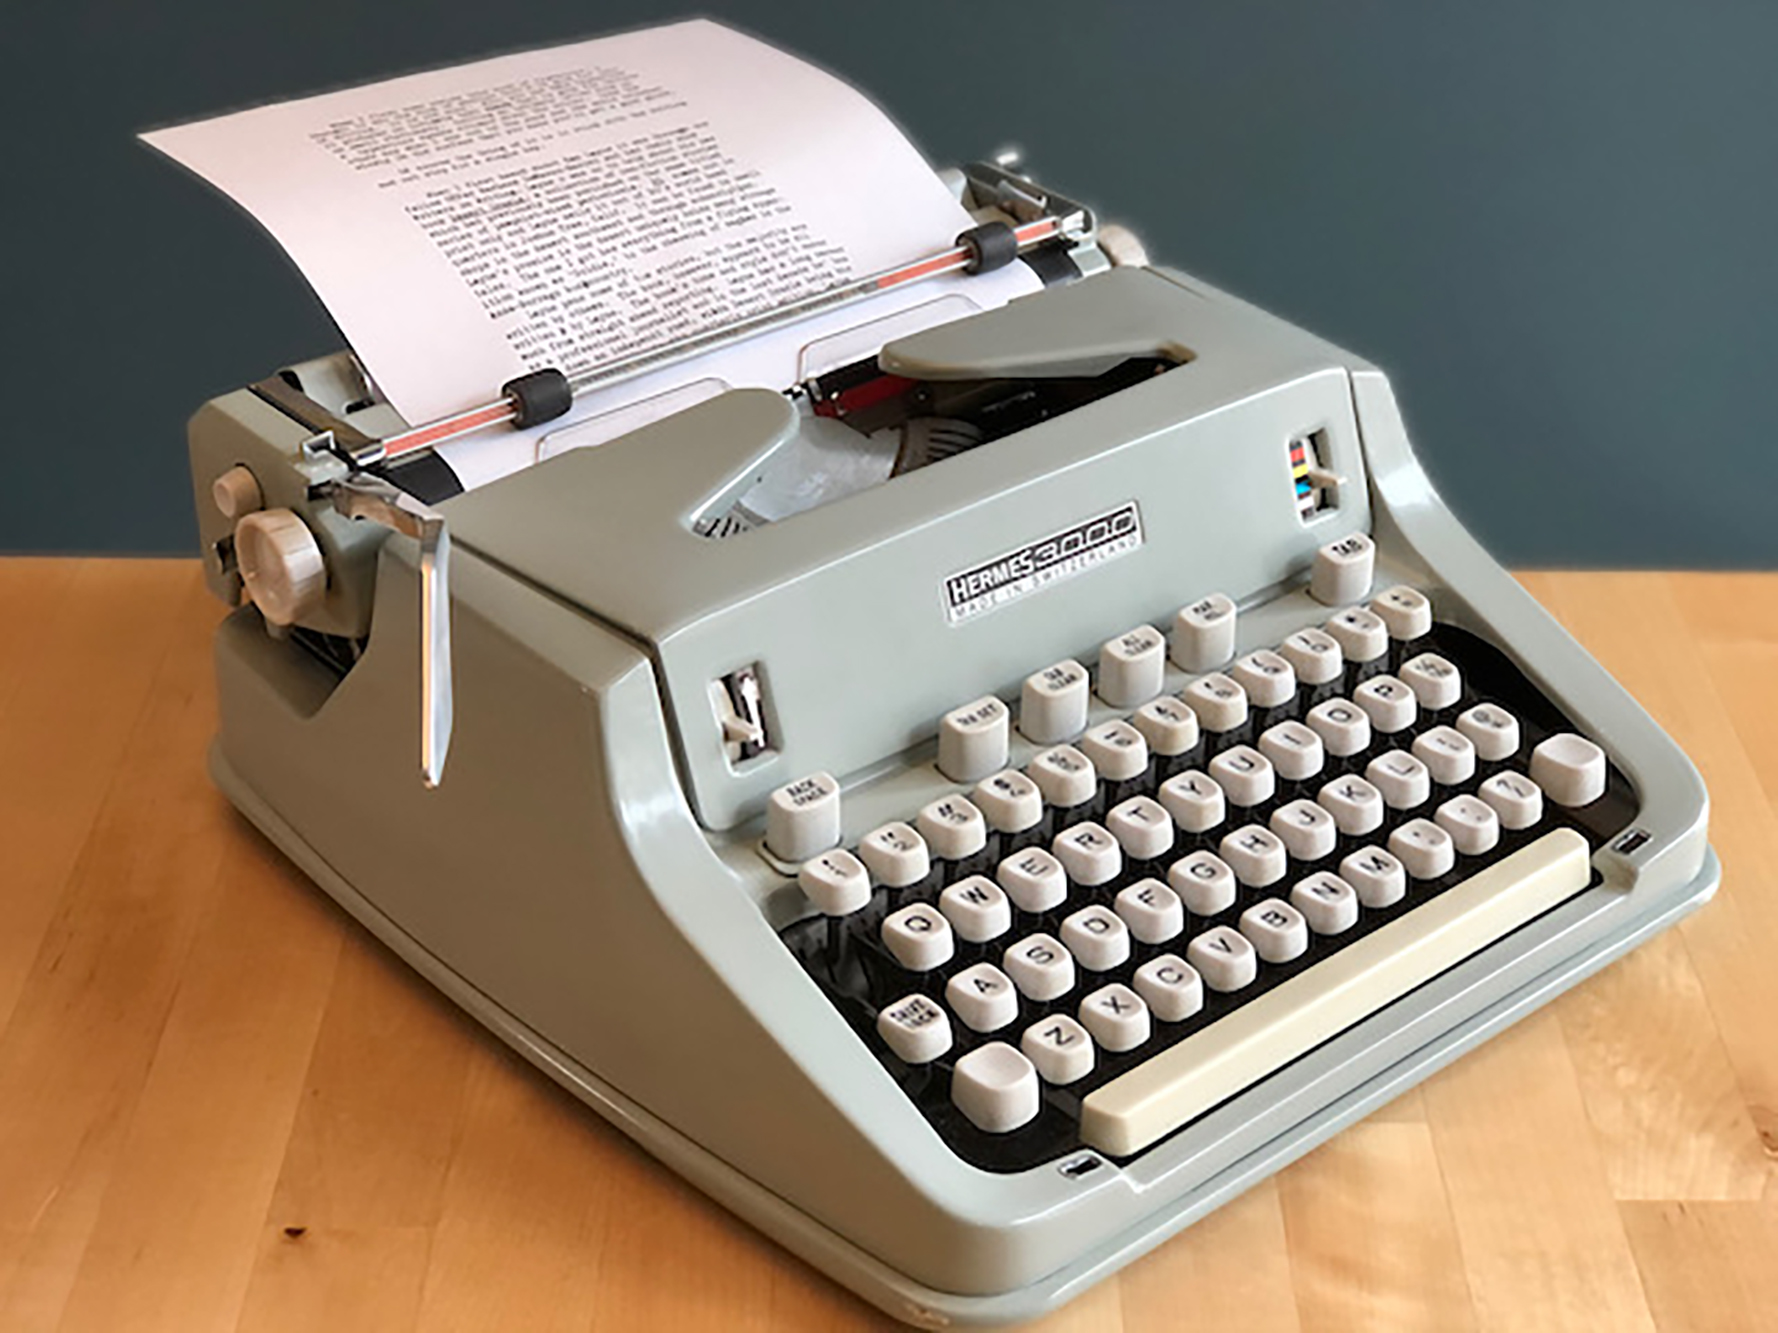 the Hermes 3000 typewriter